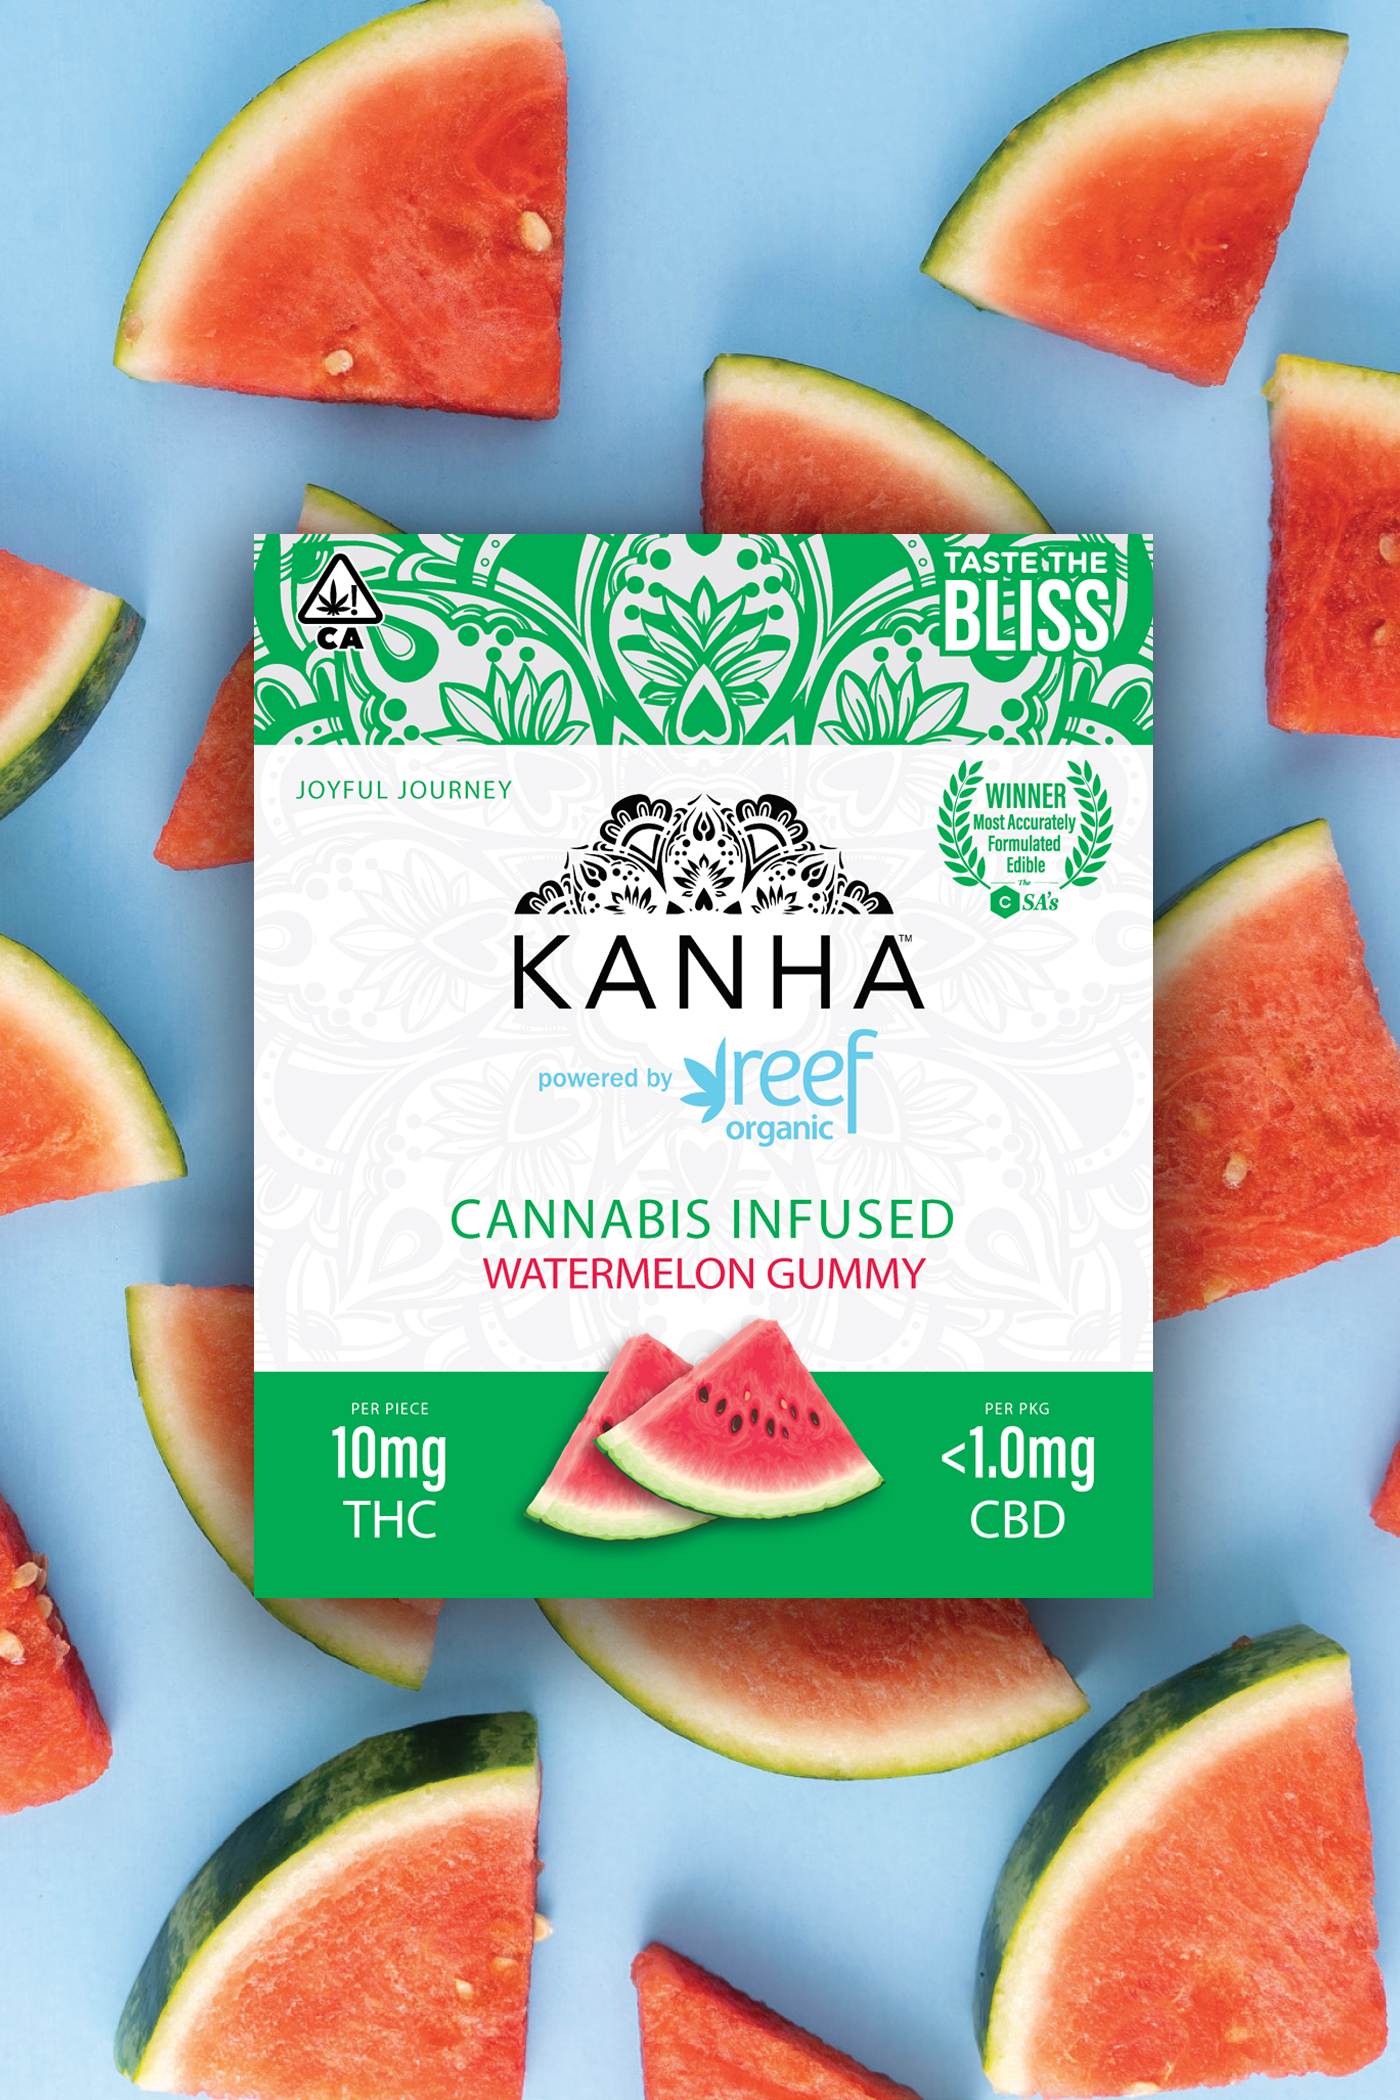 Kanha powered by Reef Organic cannabis infused watermelon gummies